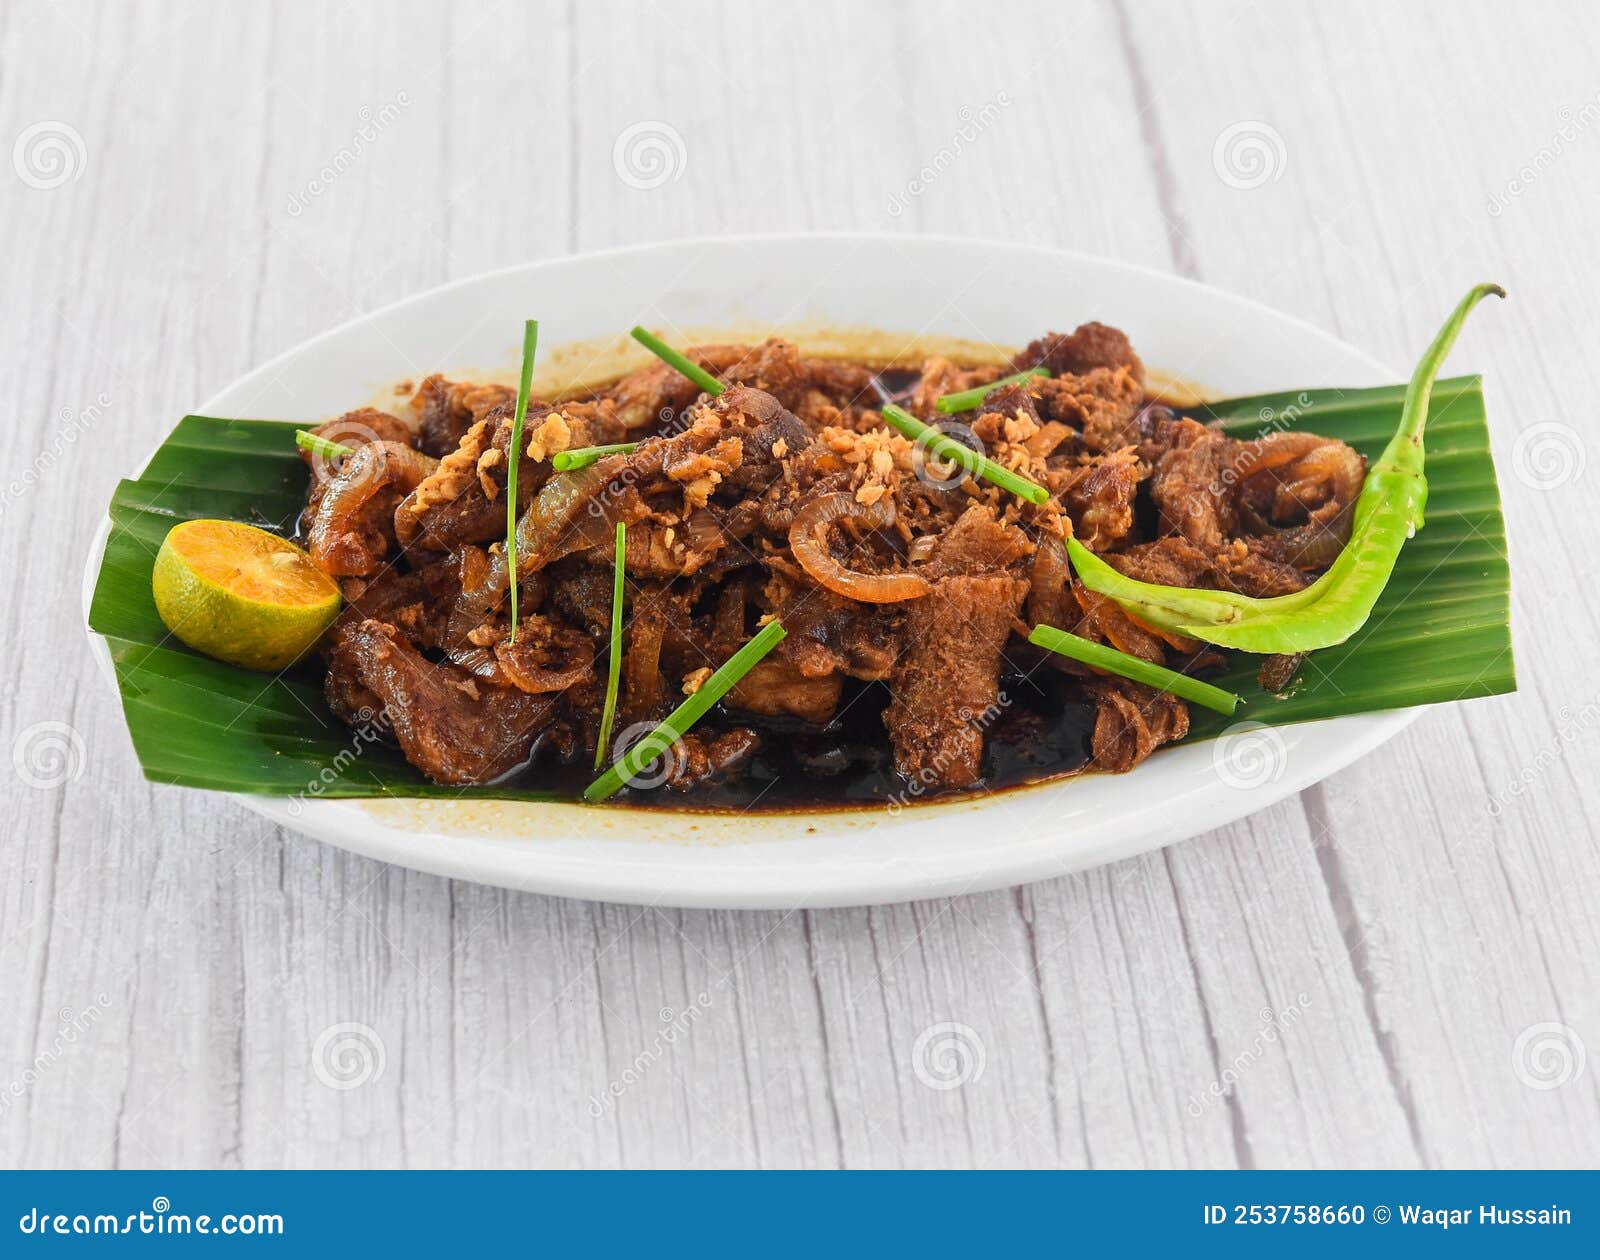 bistek tagalog beef served in dish  on grey wooden background side view of fastfood